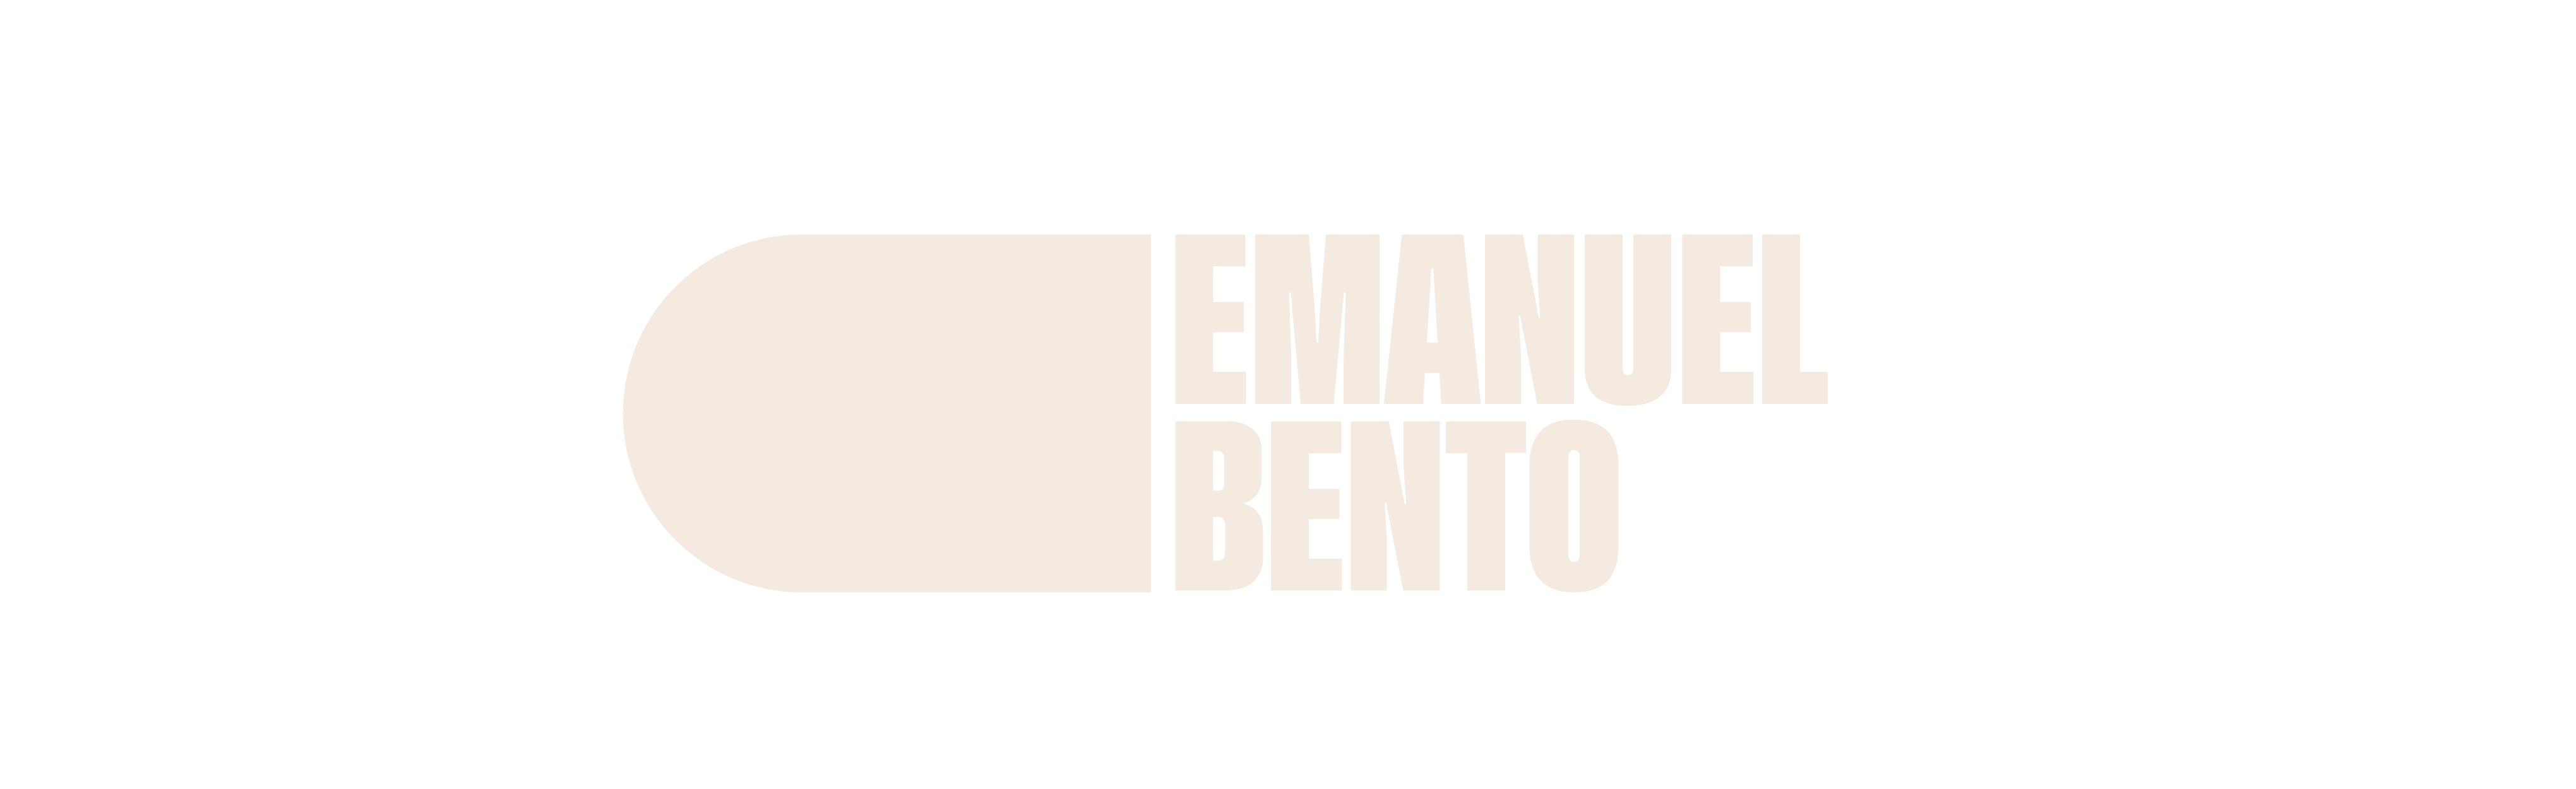 Emanuel Bento